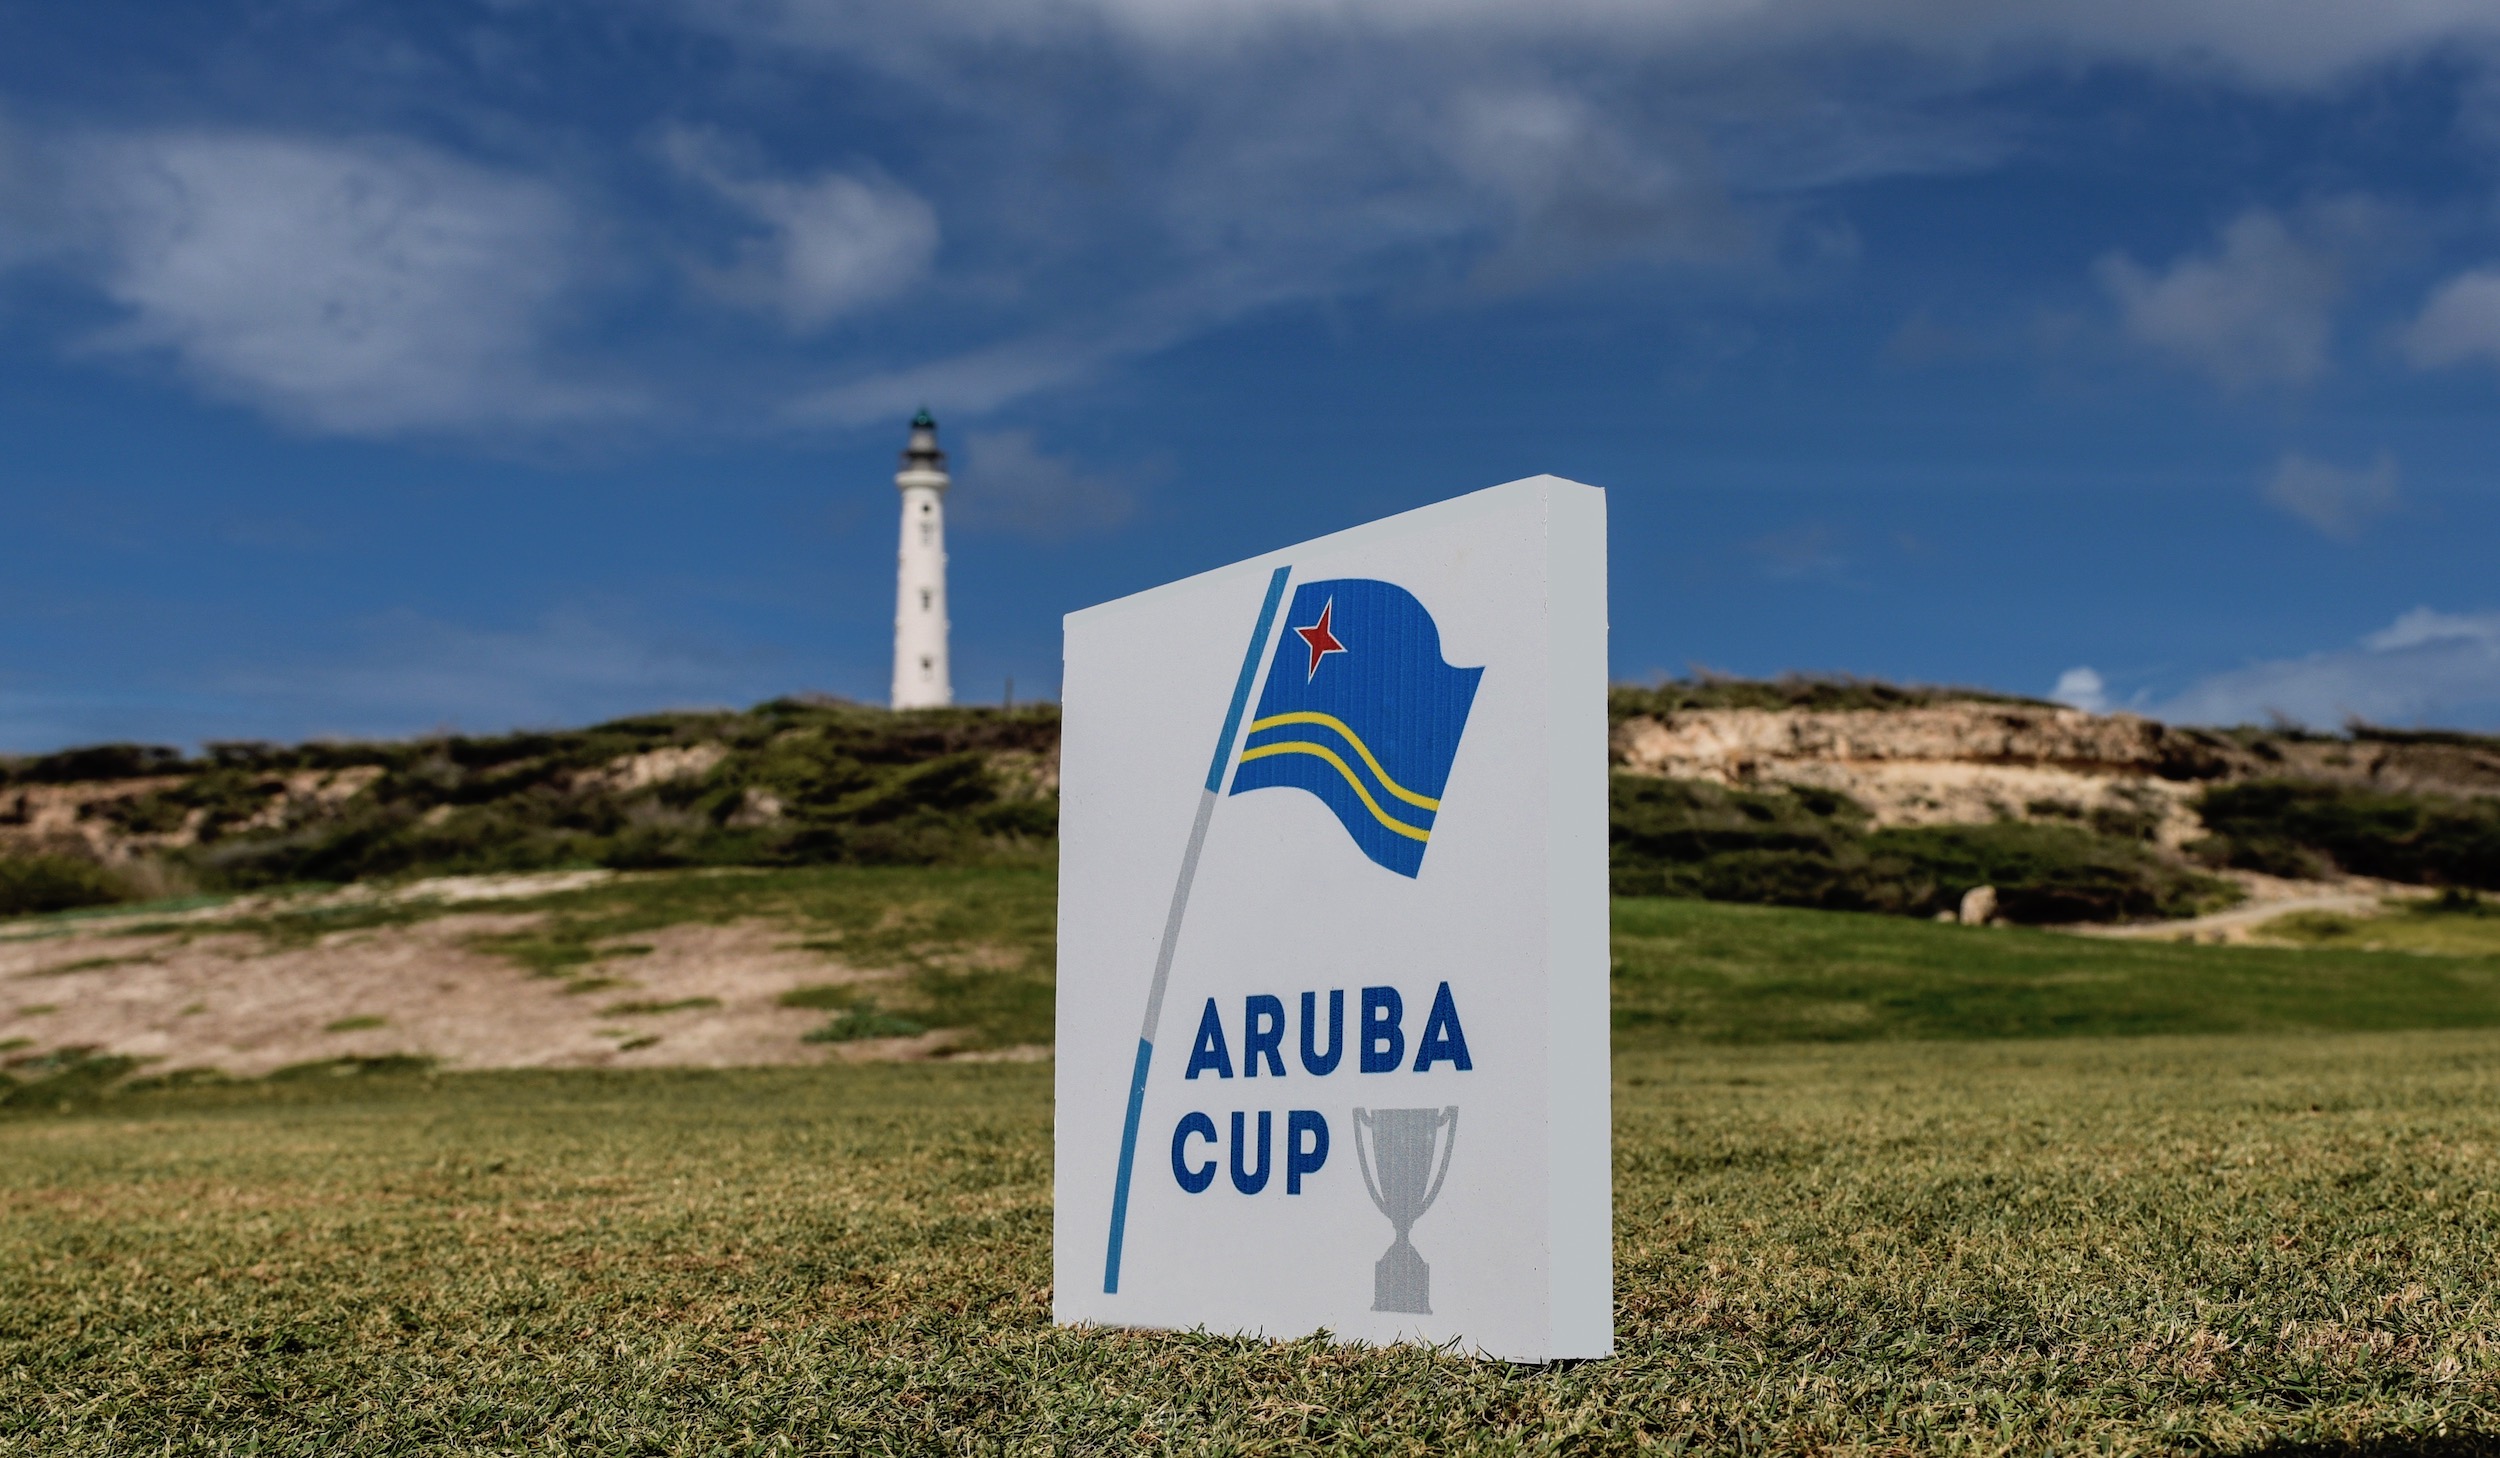 ARUBA CUP reúne a los mejores golfistas del PGA Tour Latinoamérica